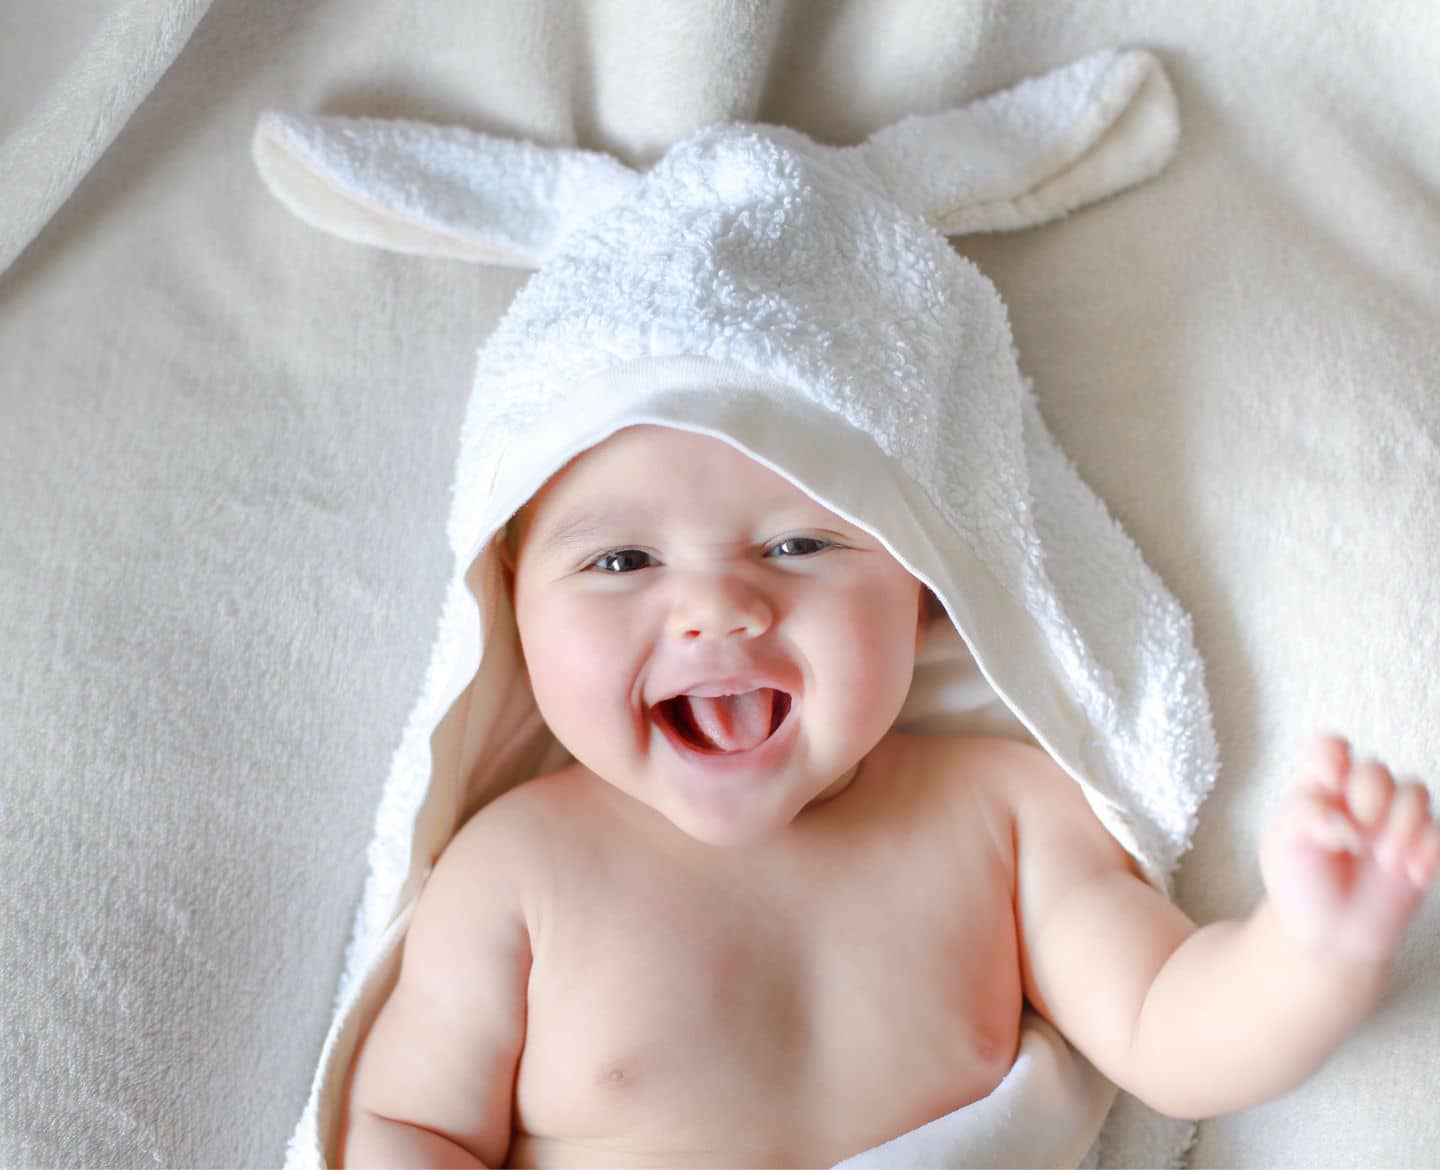 baby in towel smiling